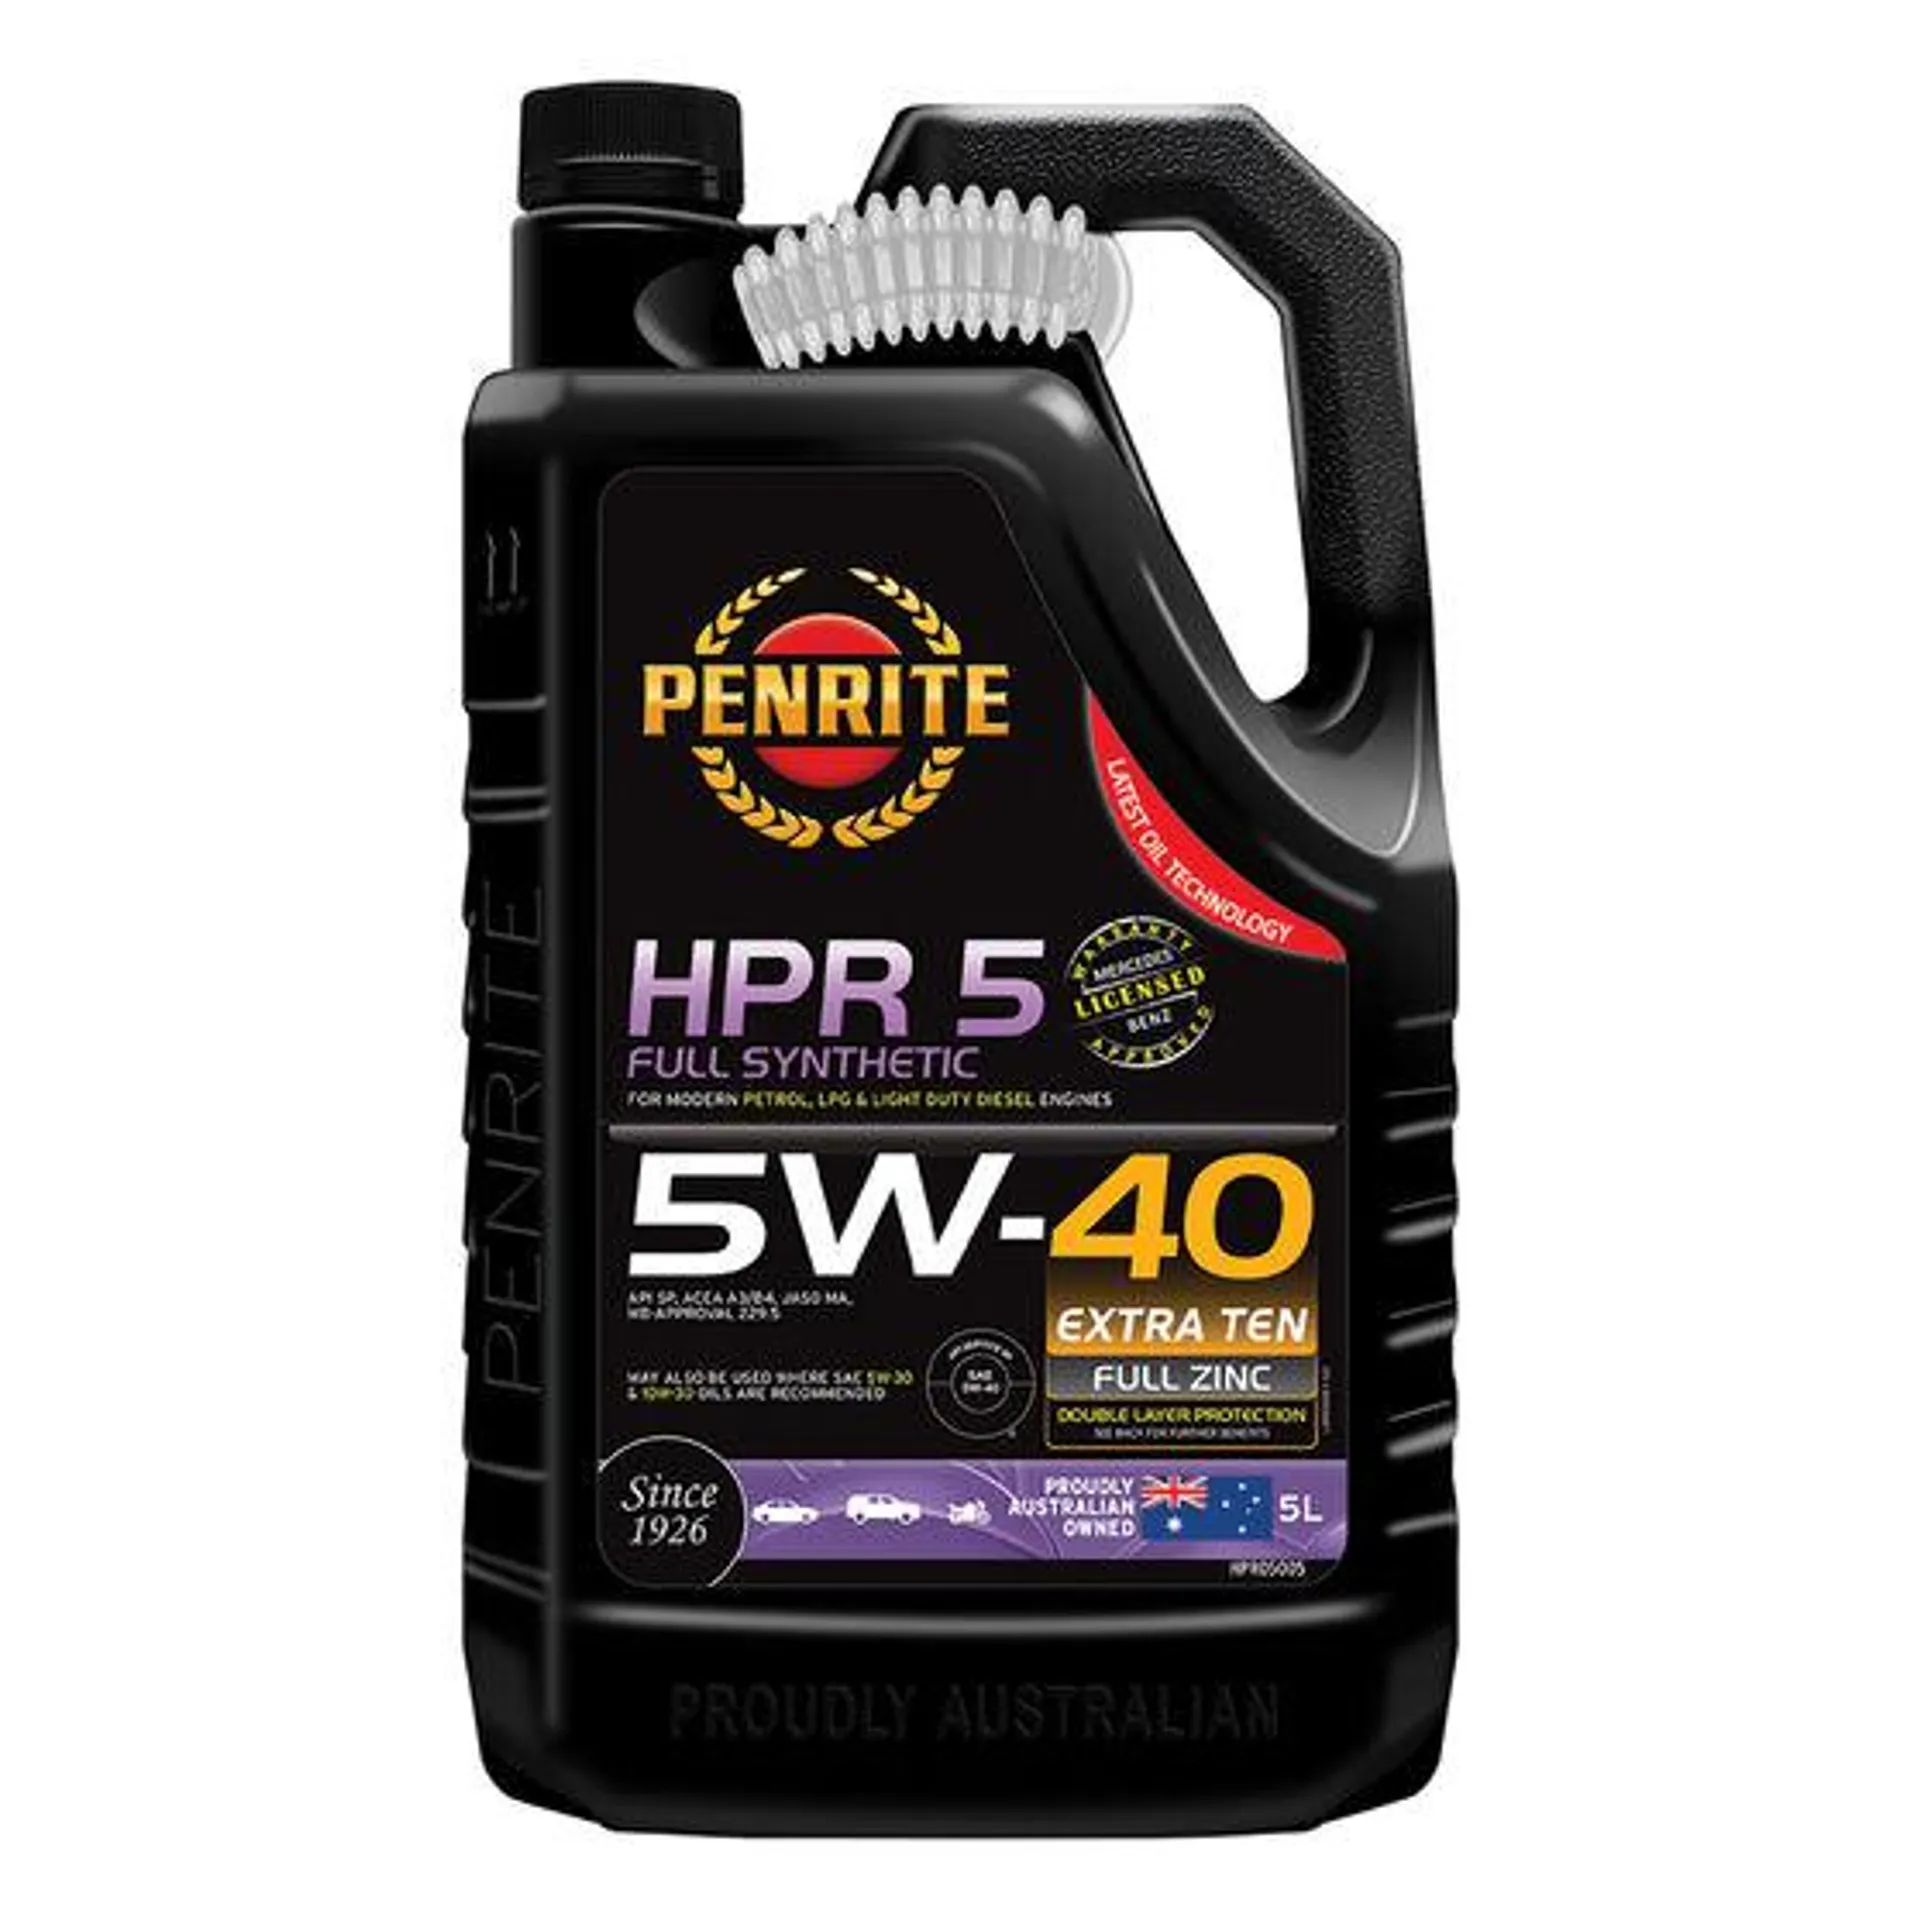 Penrite HPR 5 Engine Oil - 5W-40 5 Litre